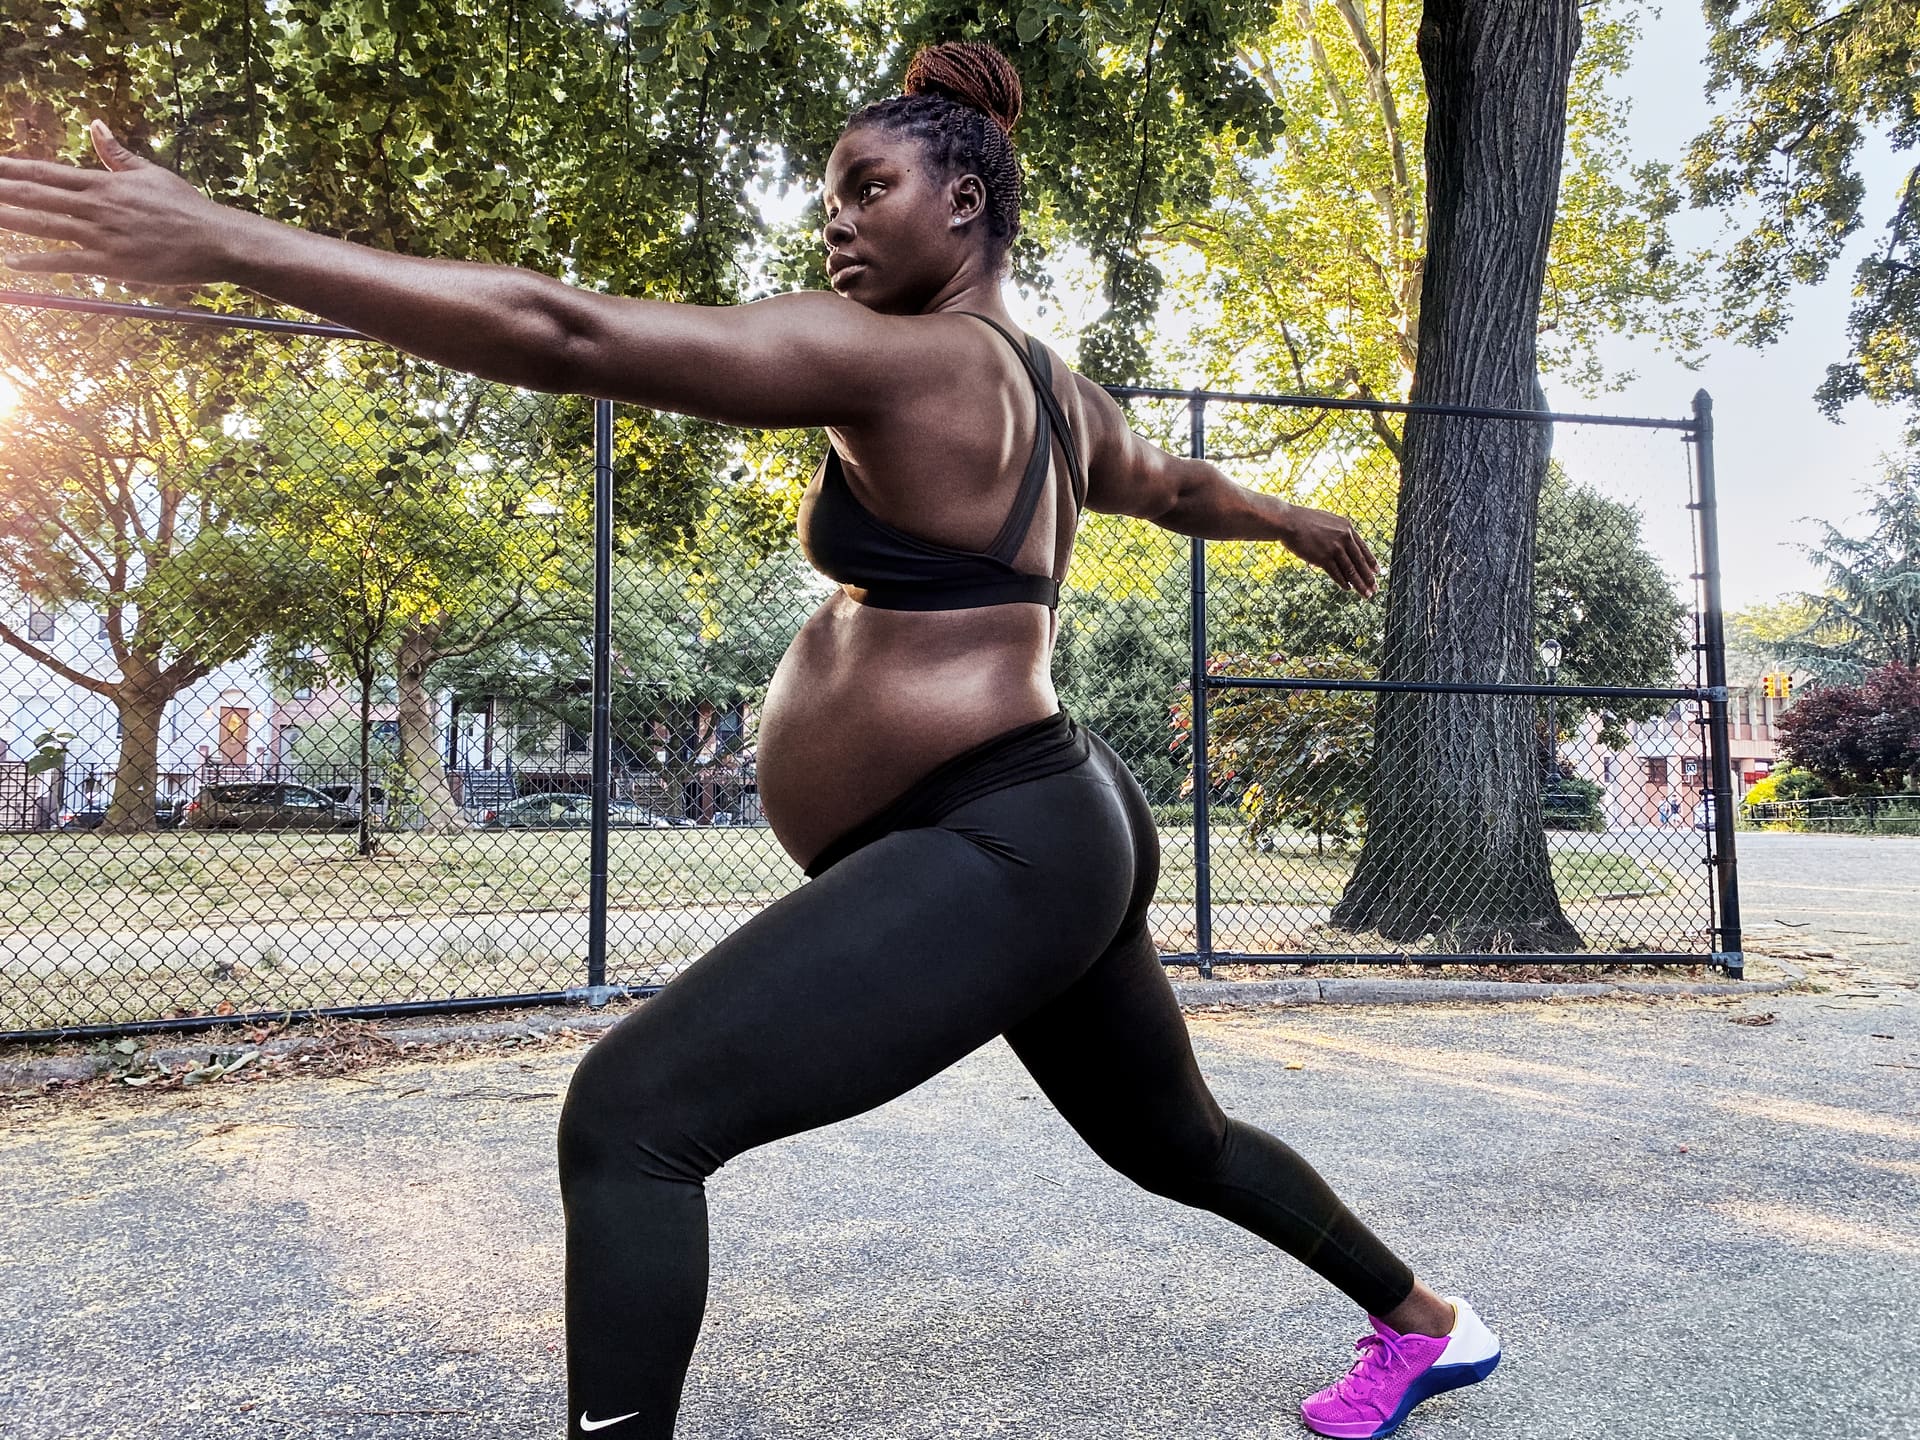 maternity gym leggings nike